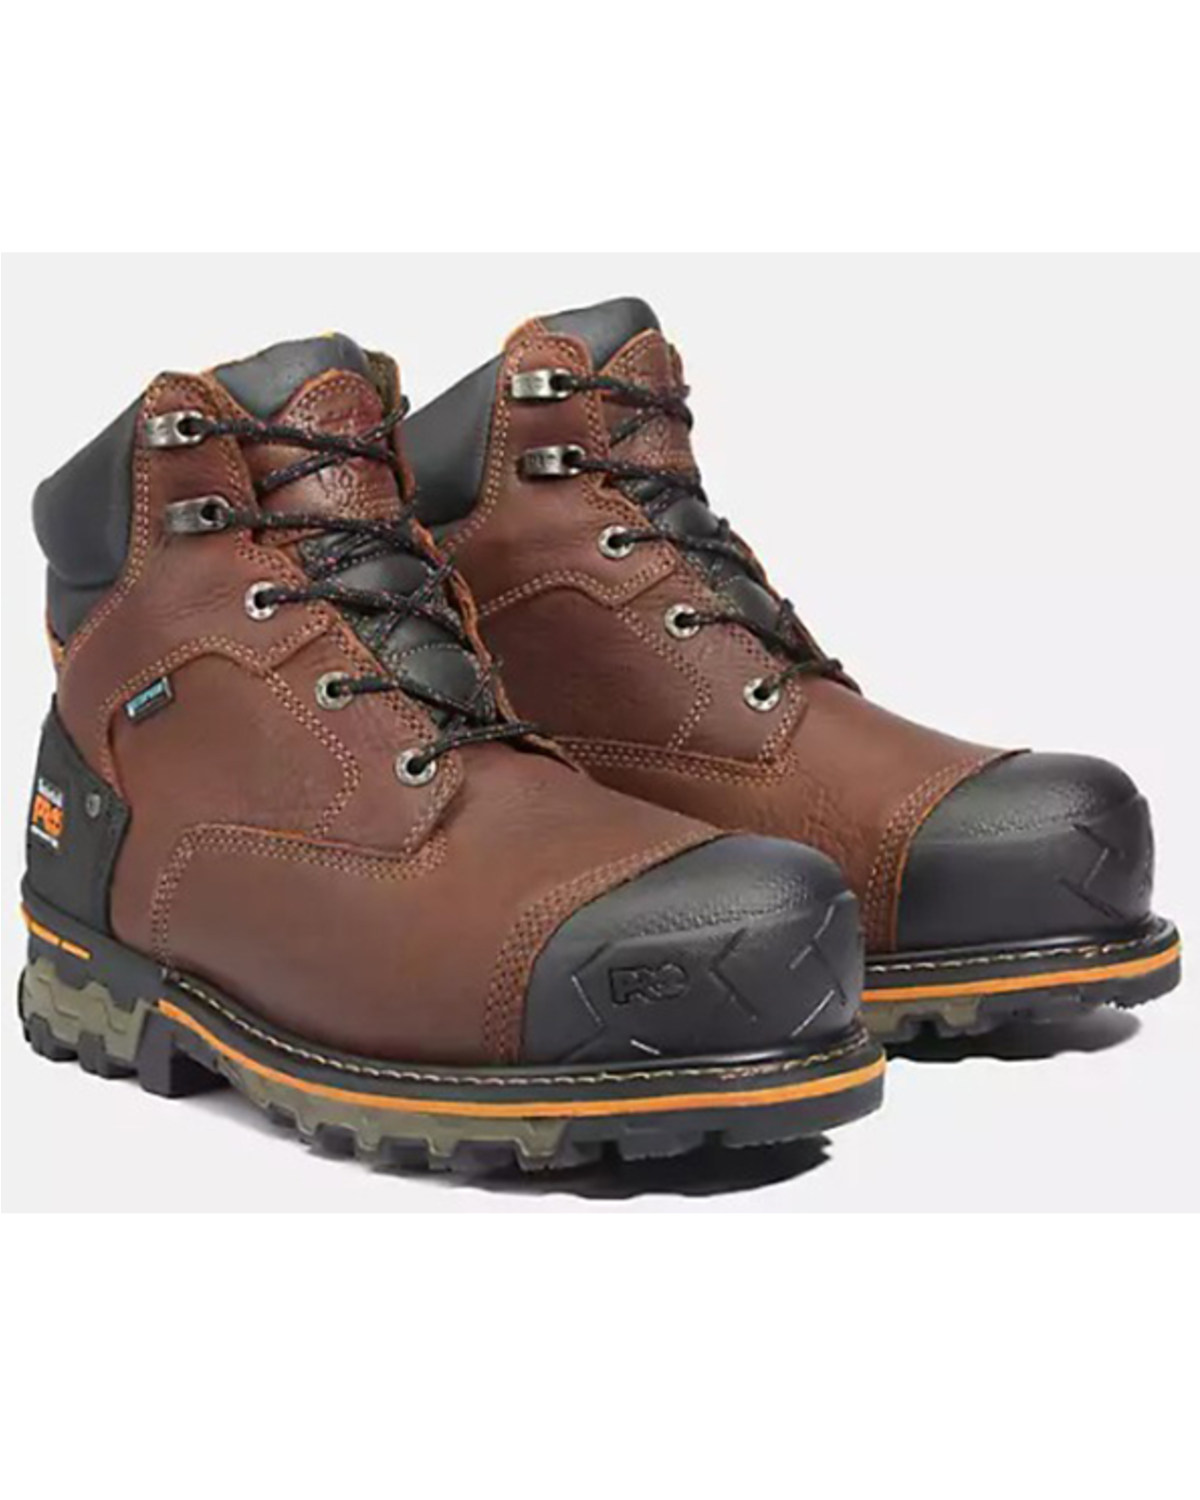 Timberland PRO Men's Boondock 6" Waterproof Insulated Work Boots - Composite Toe